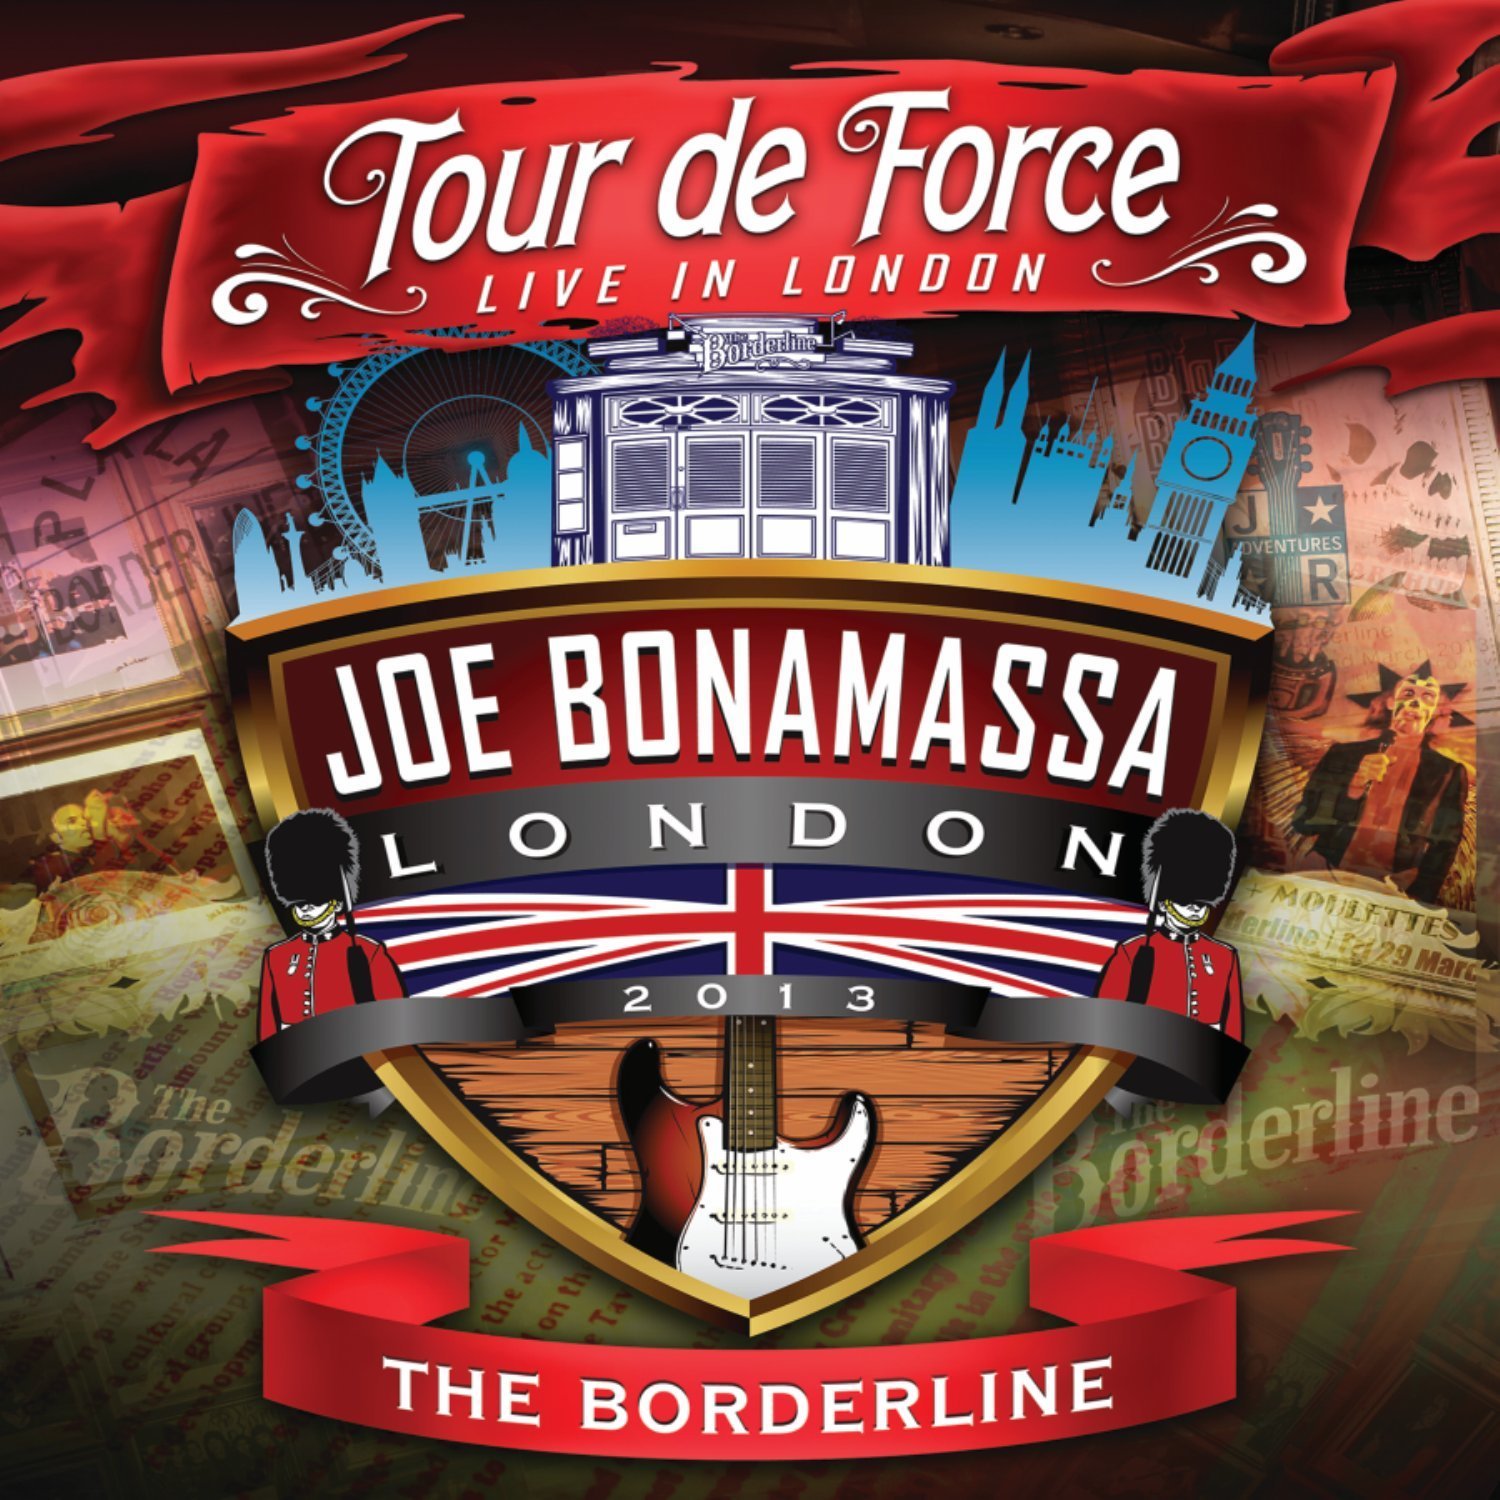 Joe Bonamassa - Tour de Force: Live in London - Album - Bob Held Writer